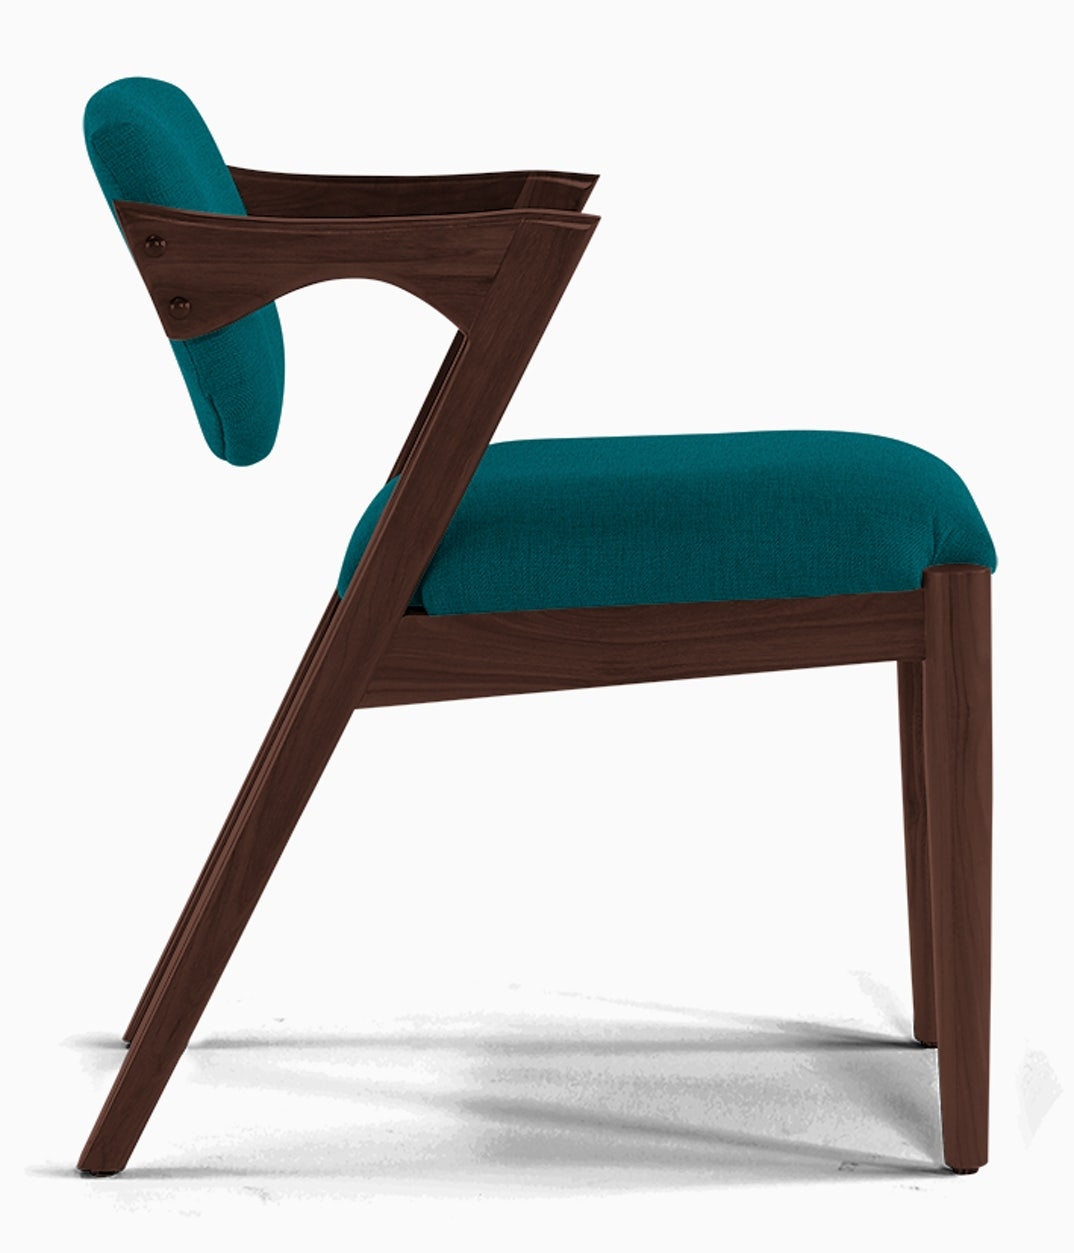 Blue Morgan Mid Century Modern Dining Chair - Key Largo Zenith Teal - Walnut - Image 3